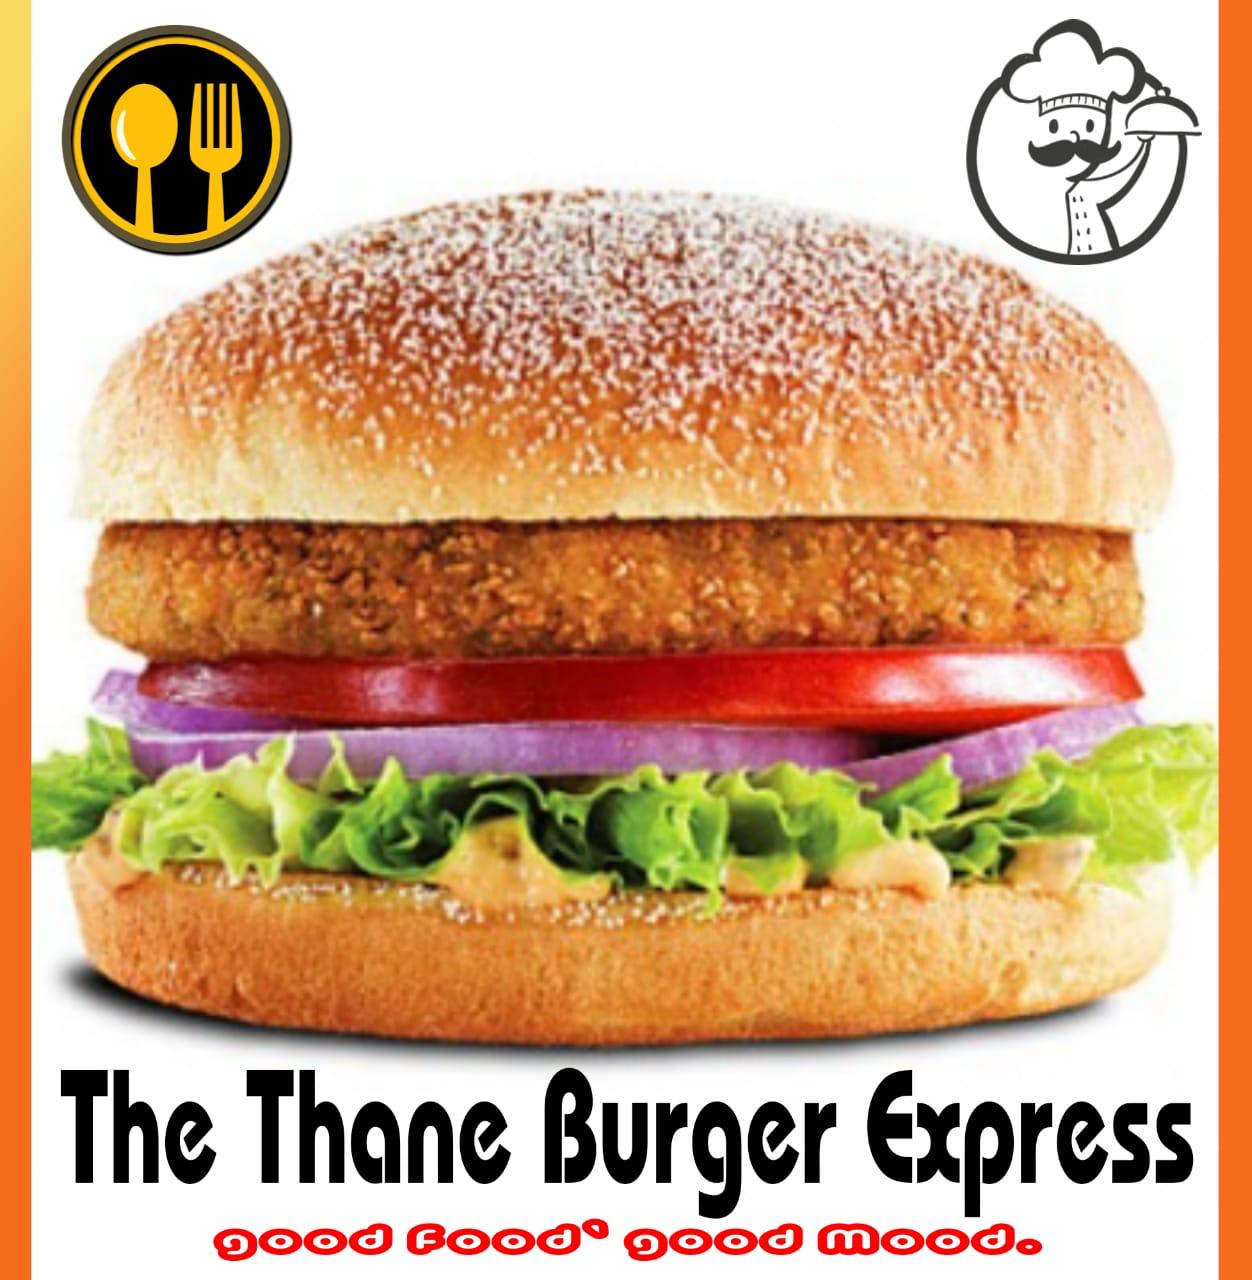 The Thane Burger Express